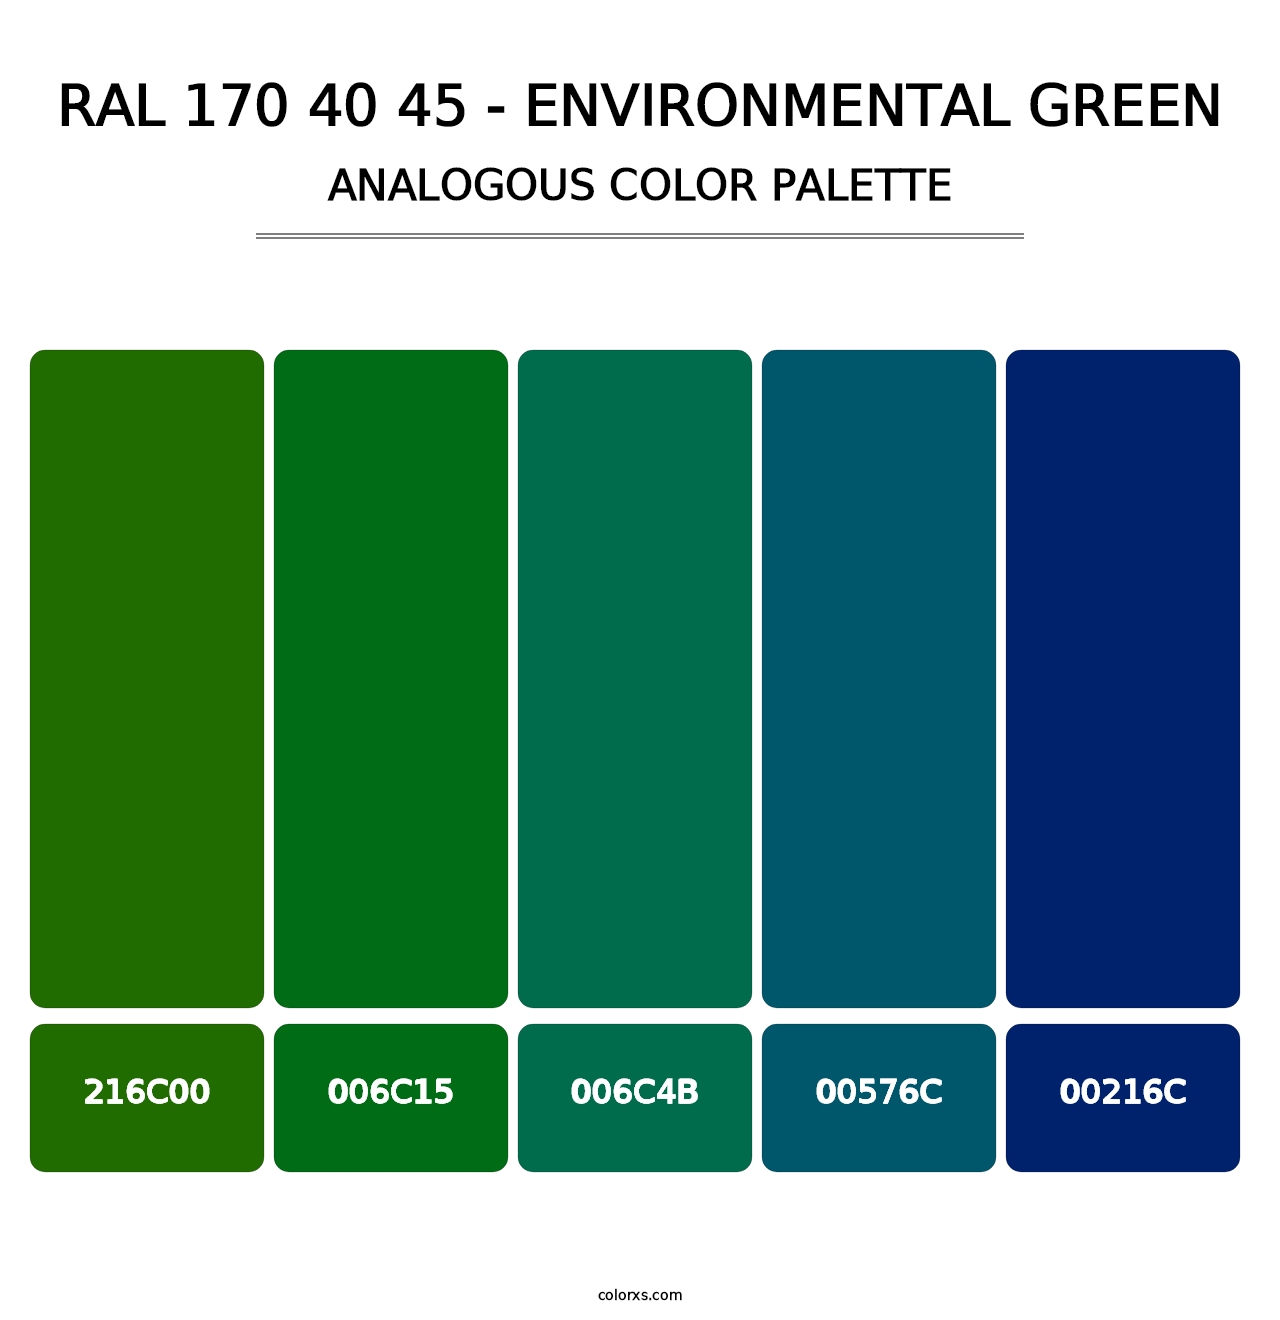 RAL 170 40 45 - Environmental Green - Analogous Color Palette